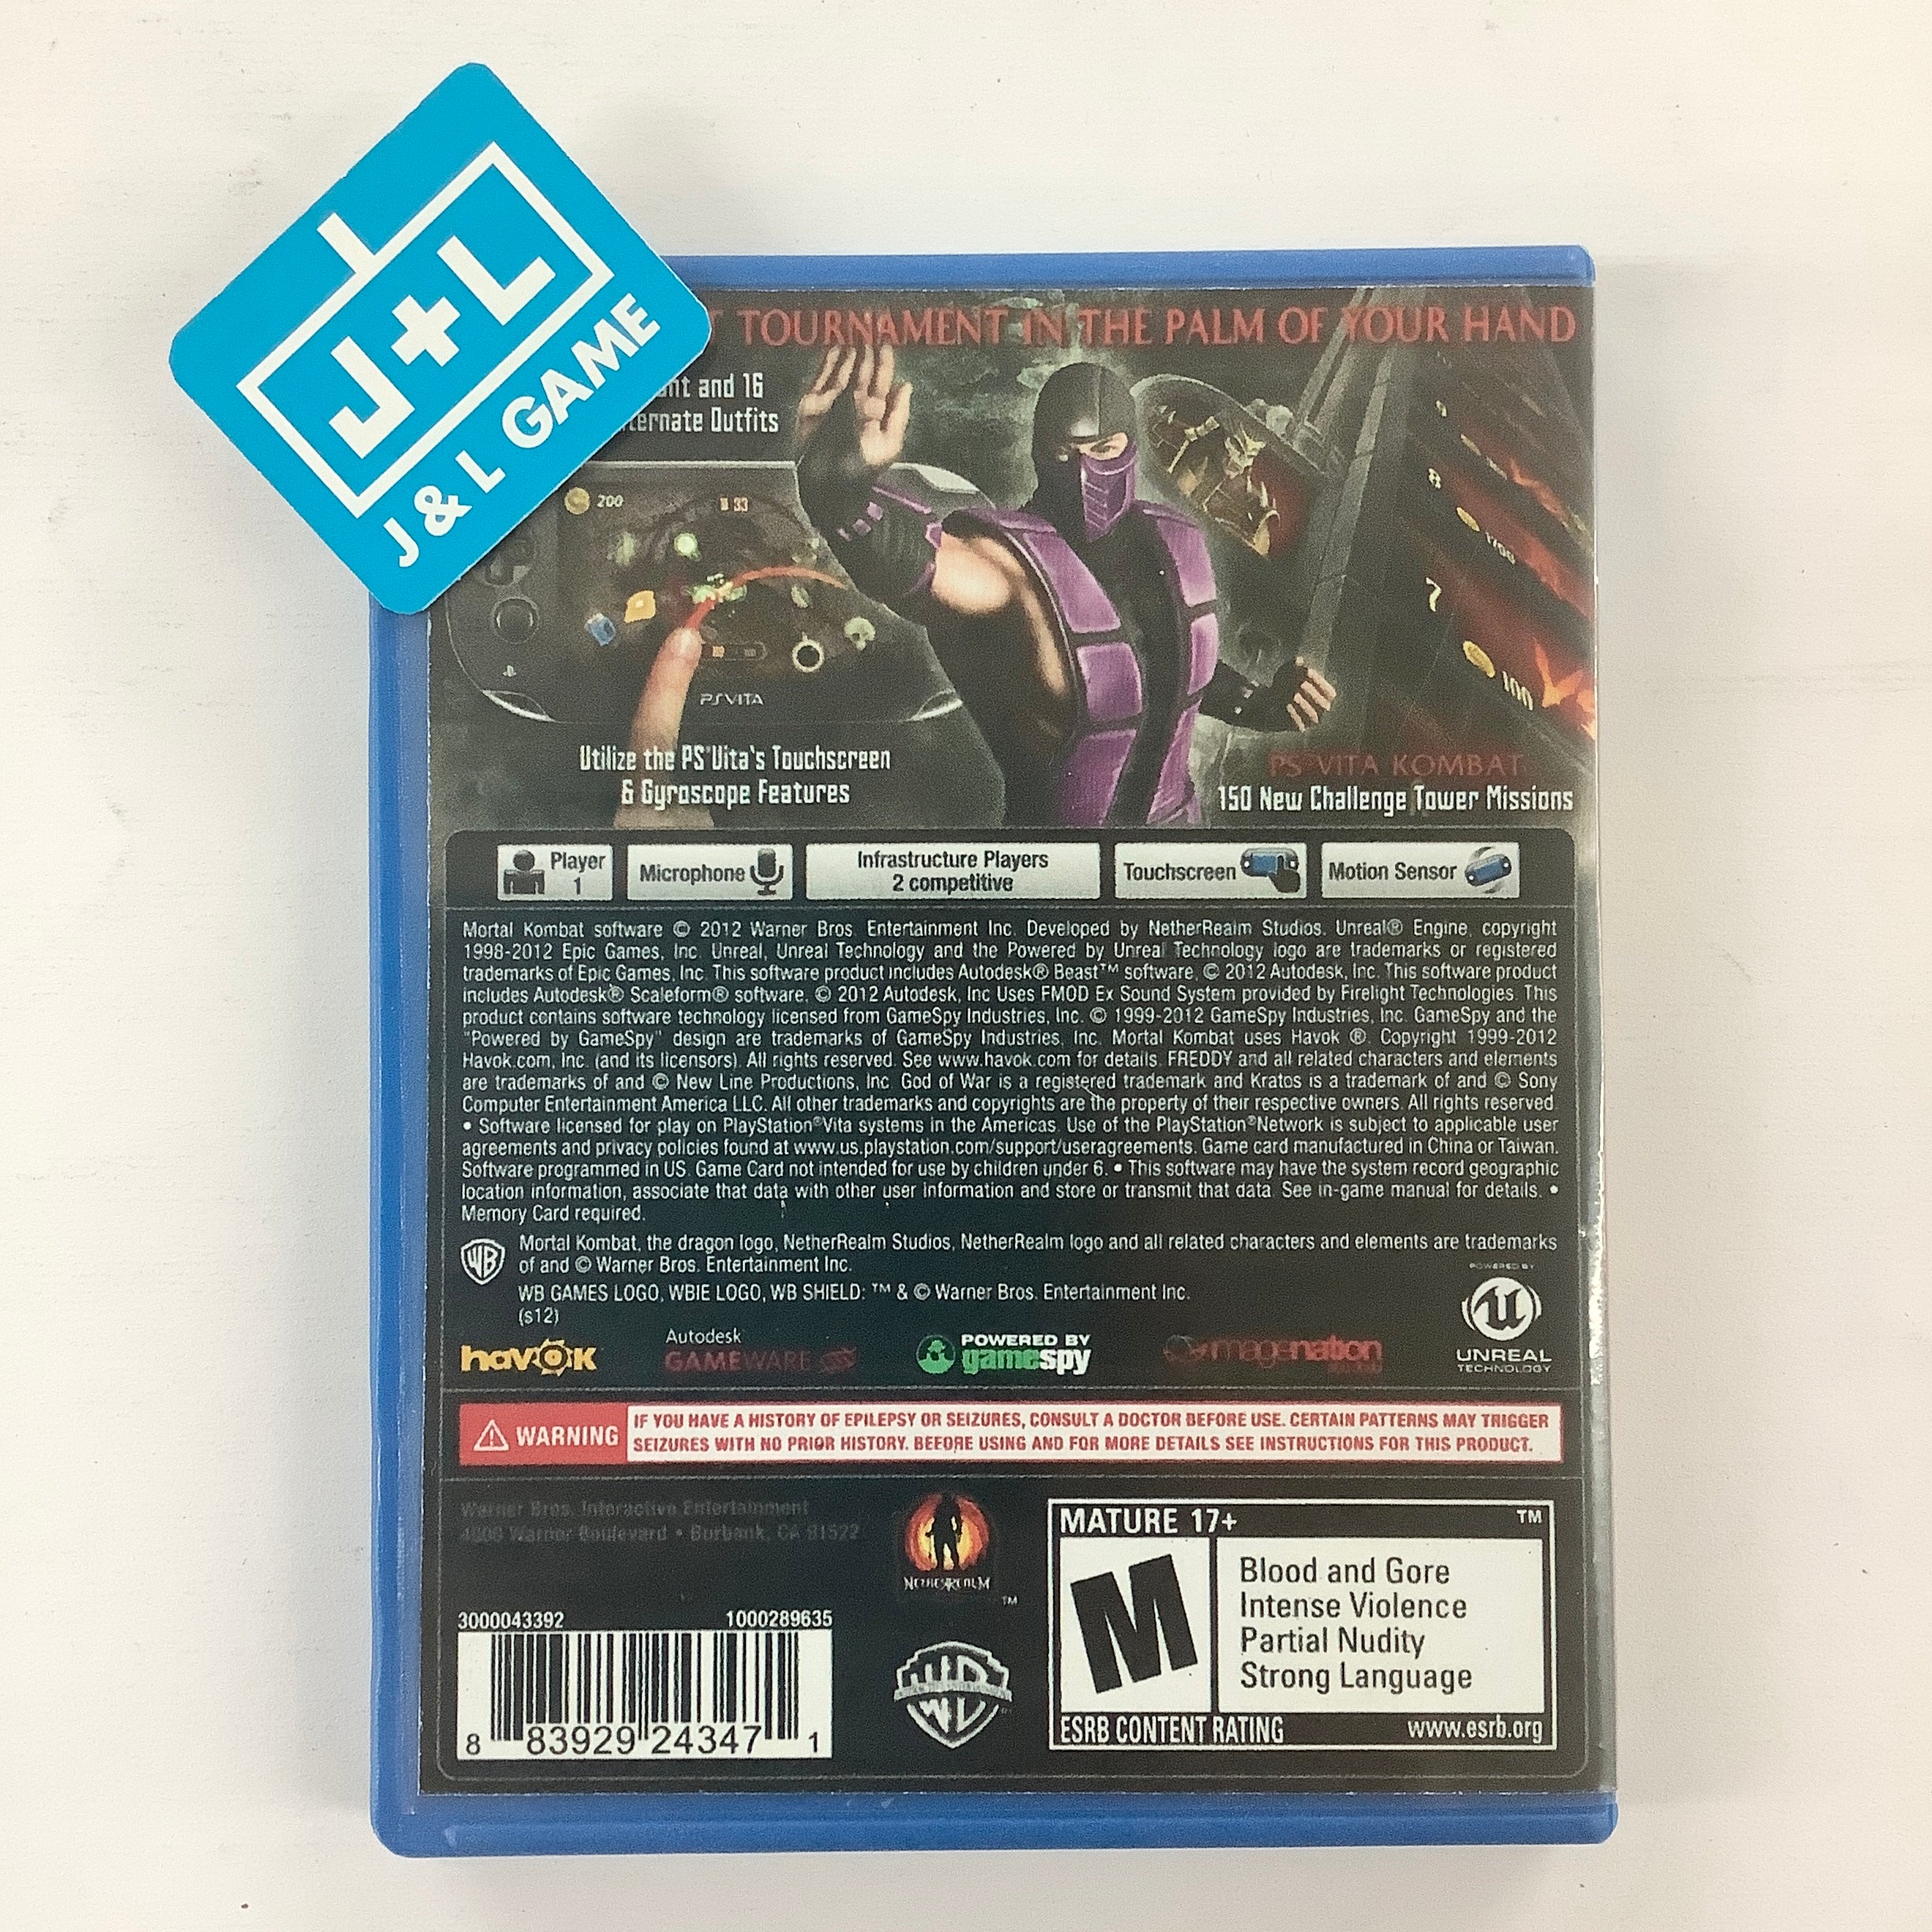 Mortal Kombat - (PSV) PlayStation Vita [Pre-Owned] Video Games WB Games   